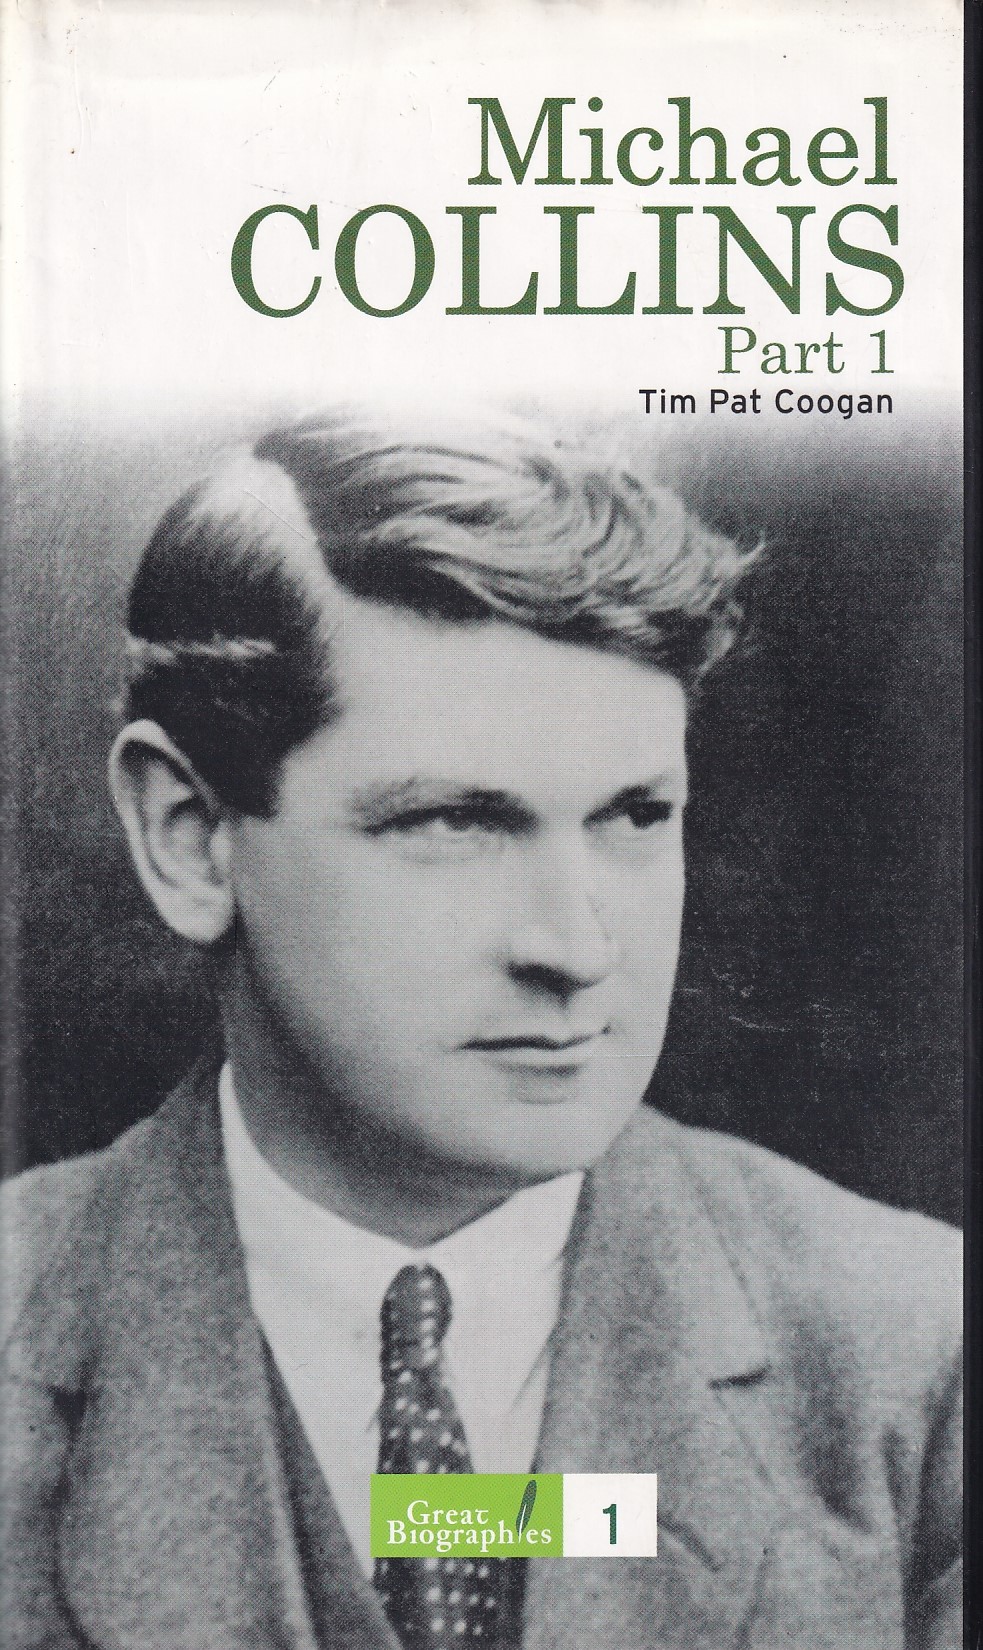 Michael Collins: Great Biographies (2 Volume Set) [SIGNED] | Tim Pat Coogan | Charlie Byrne's